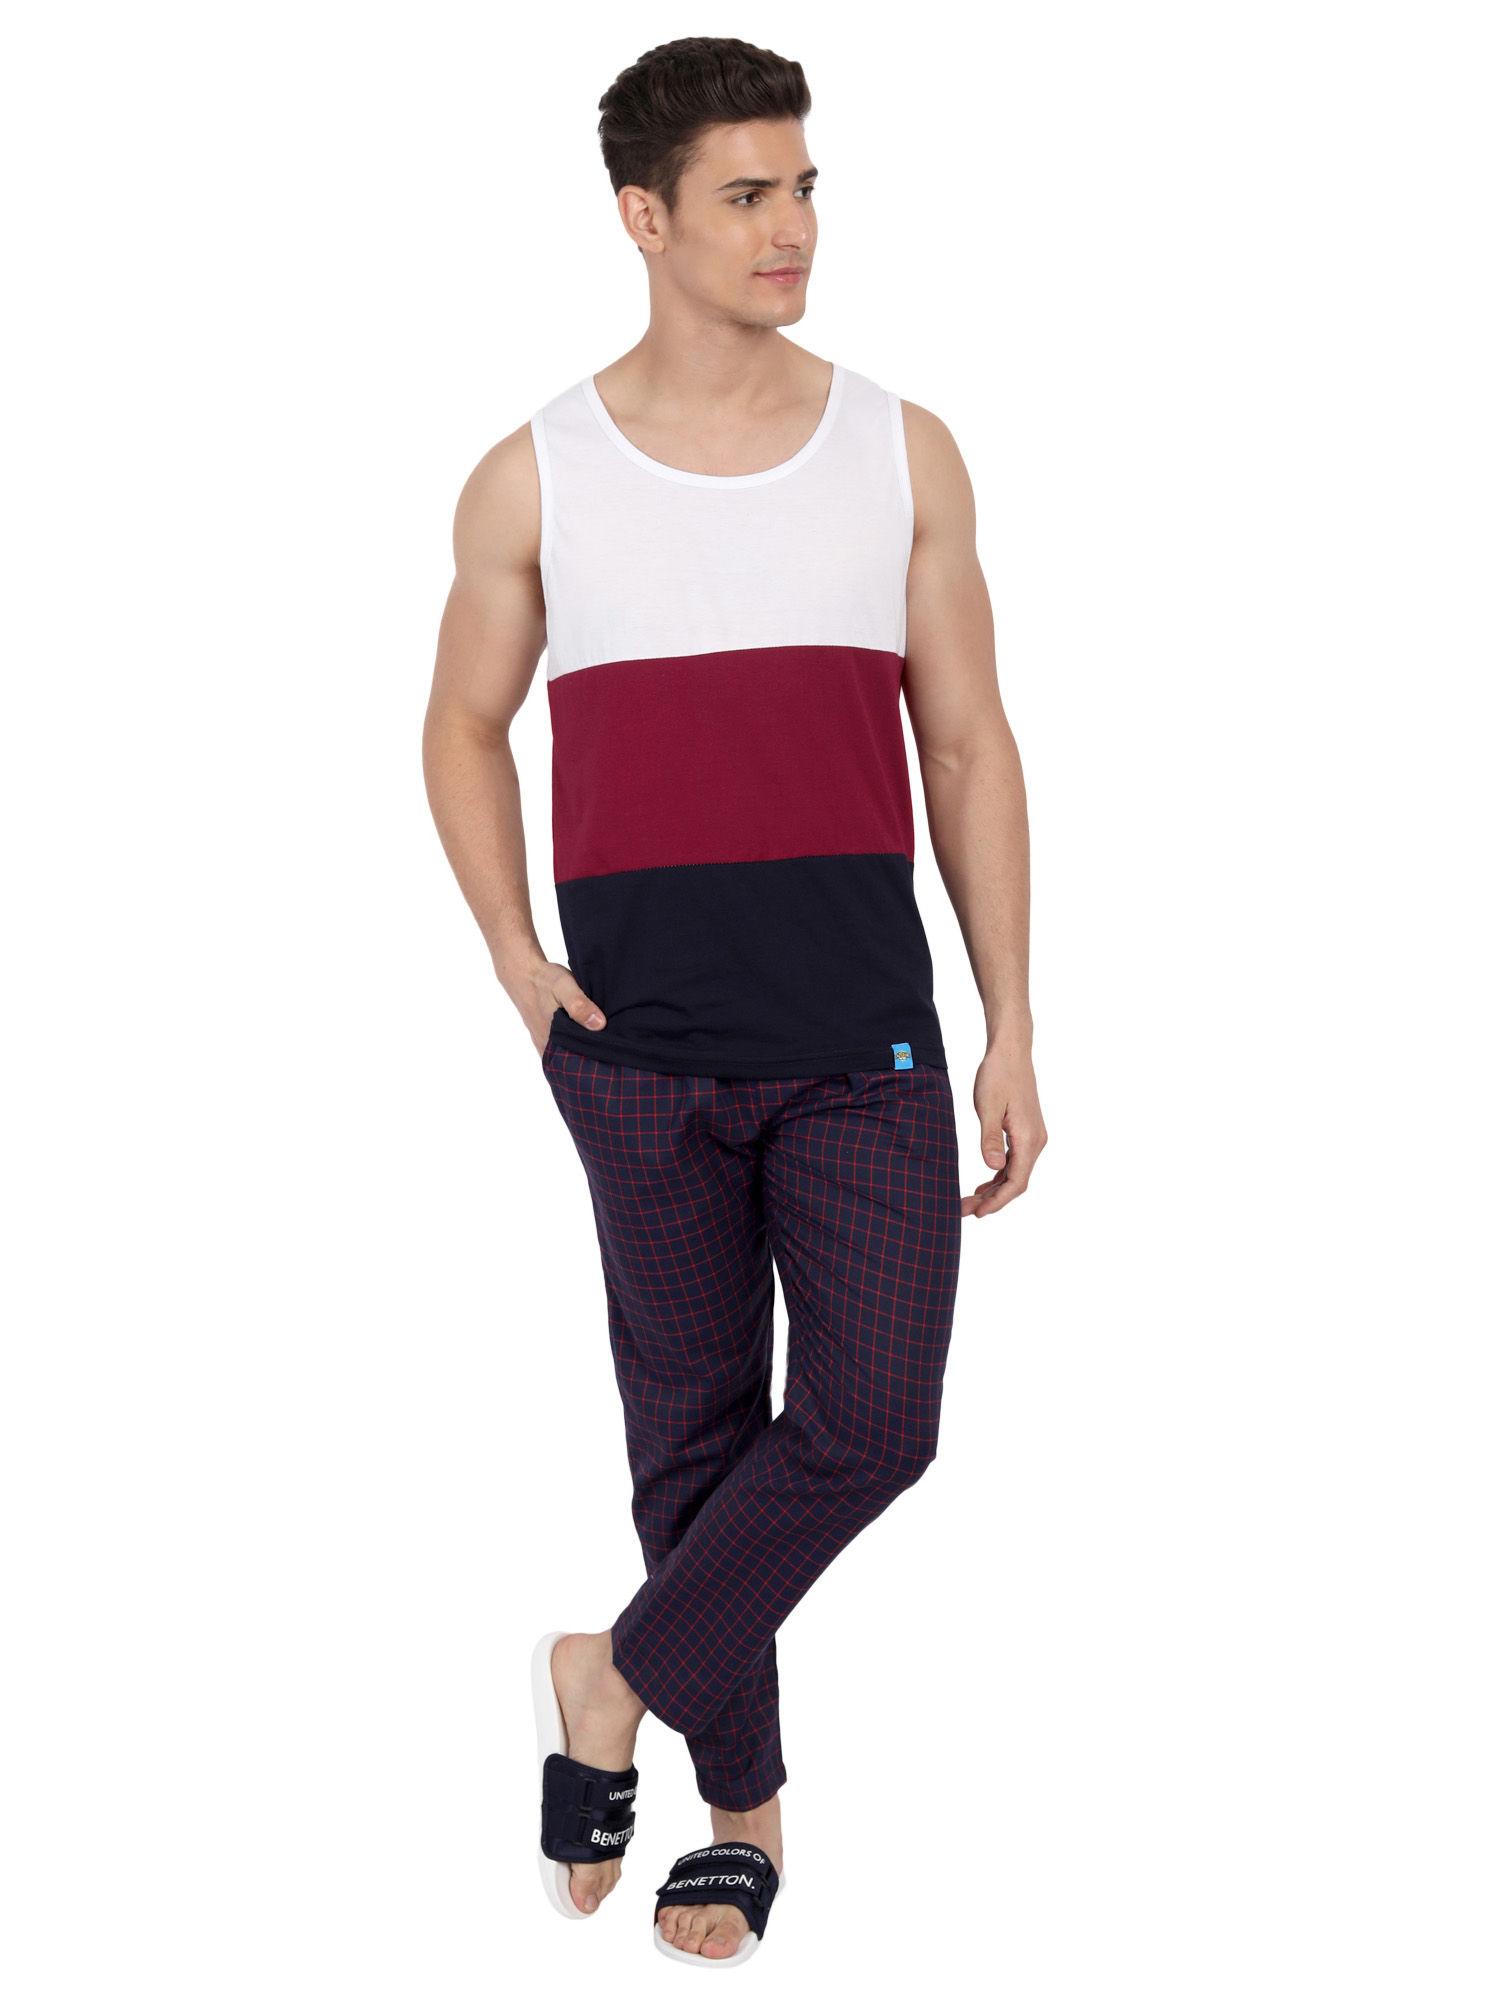 men's true essential casual blocks sleeveless vest-maroon maroon